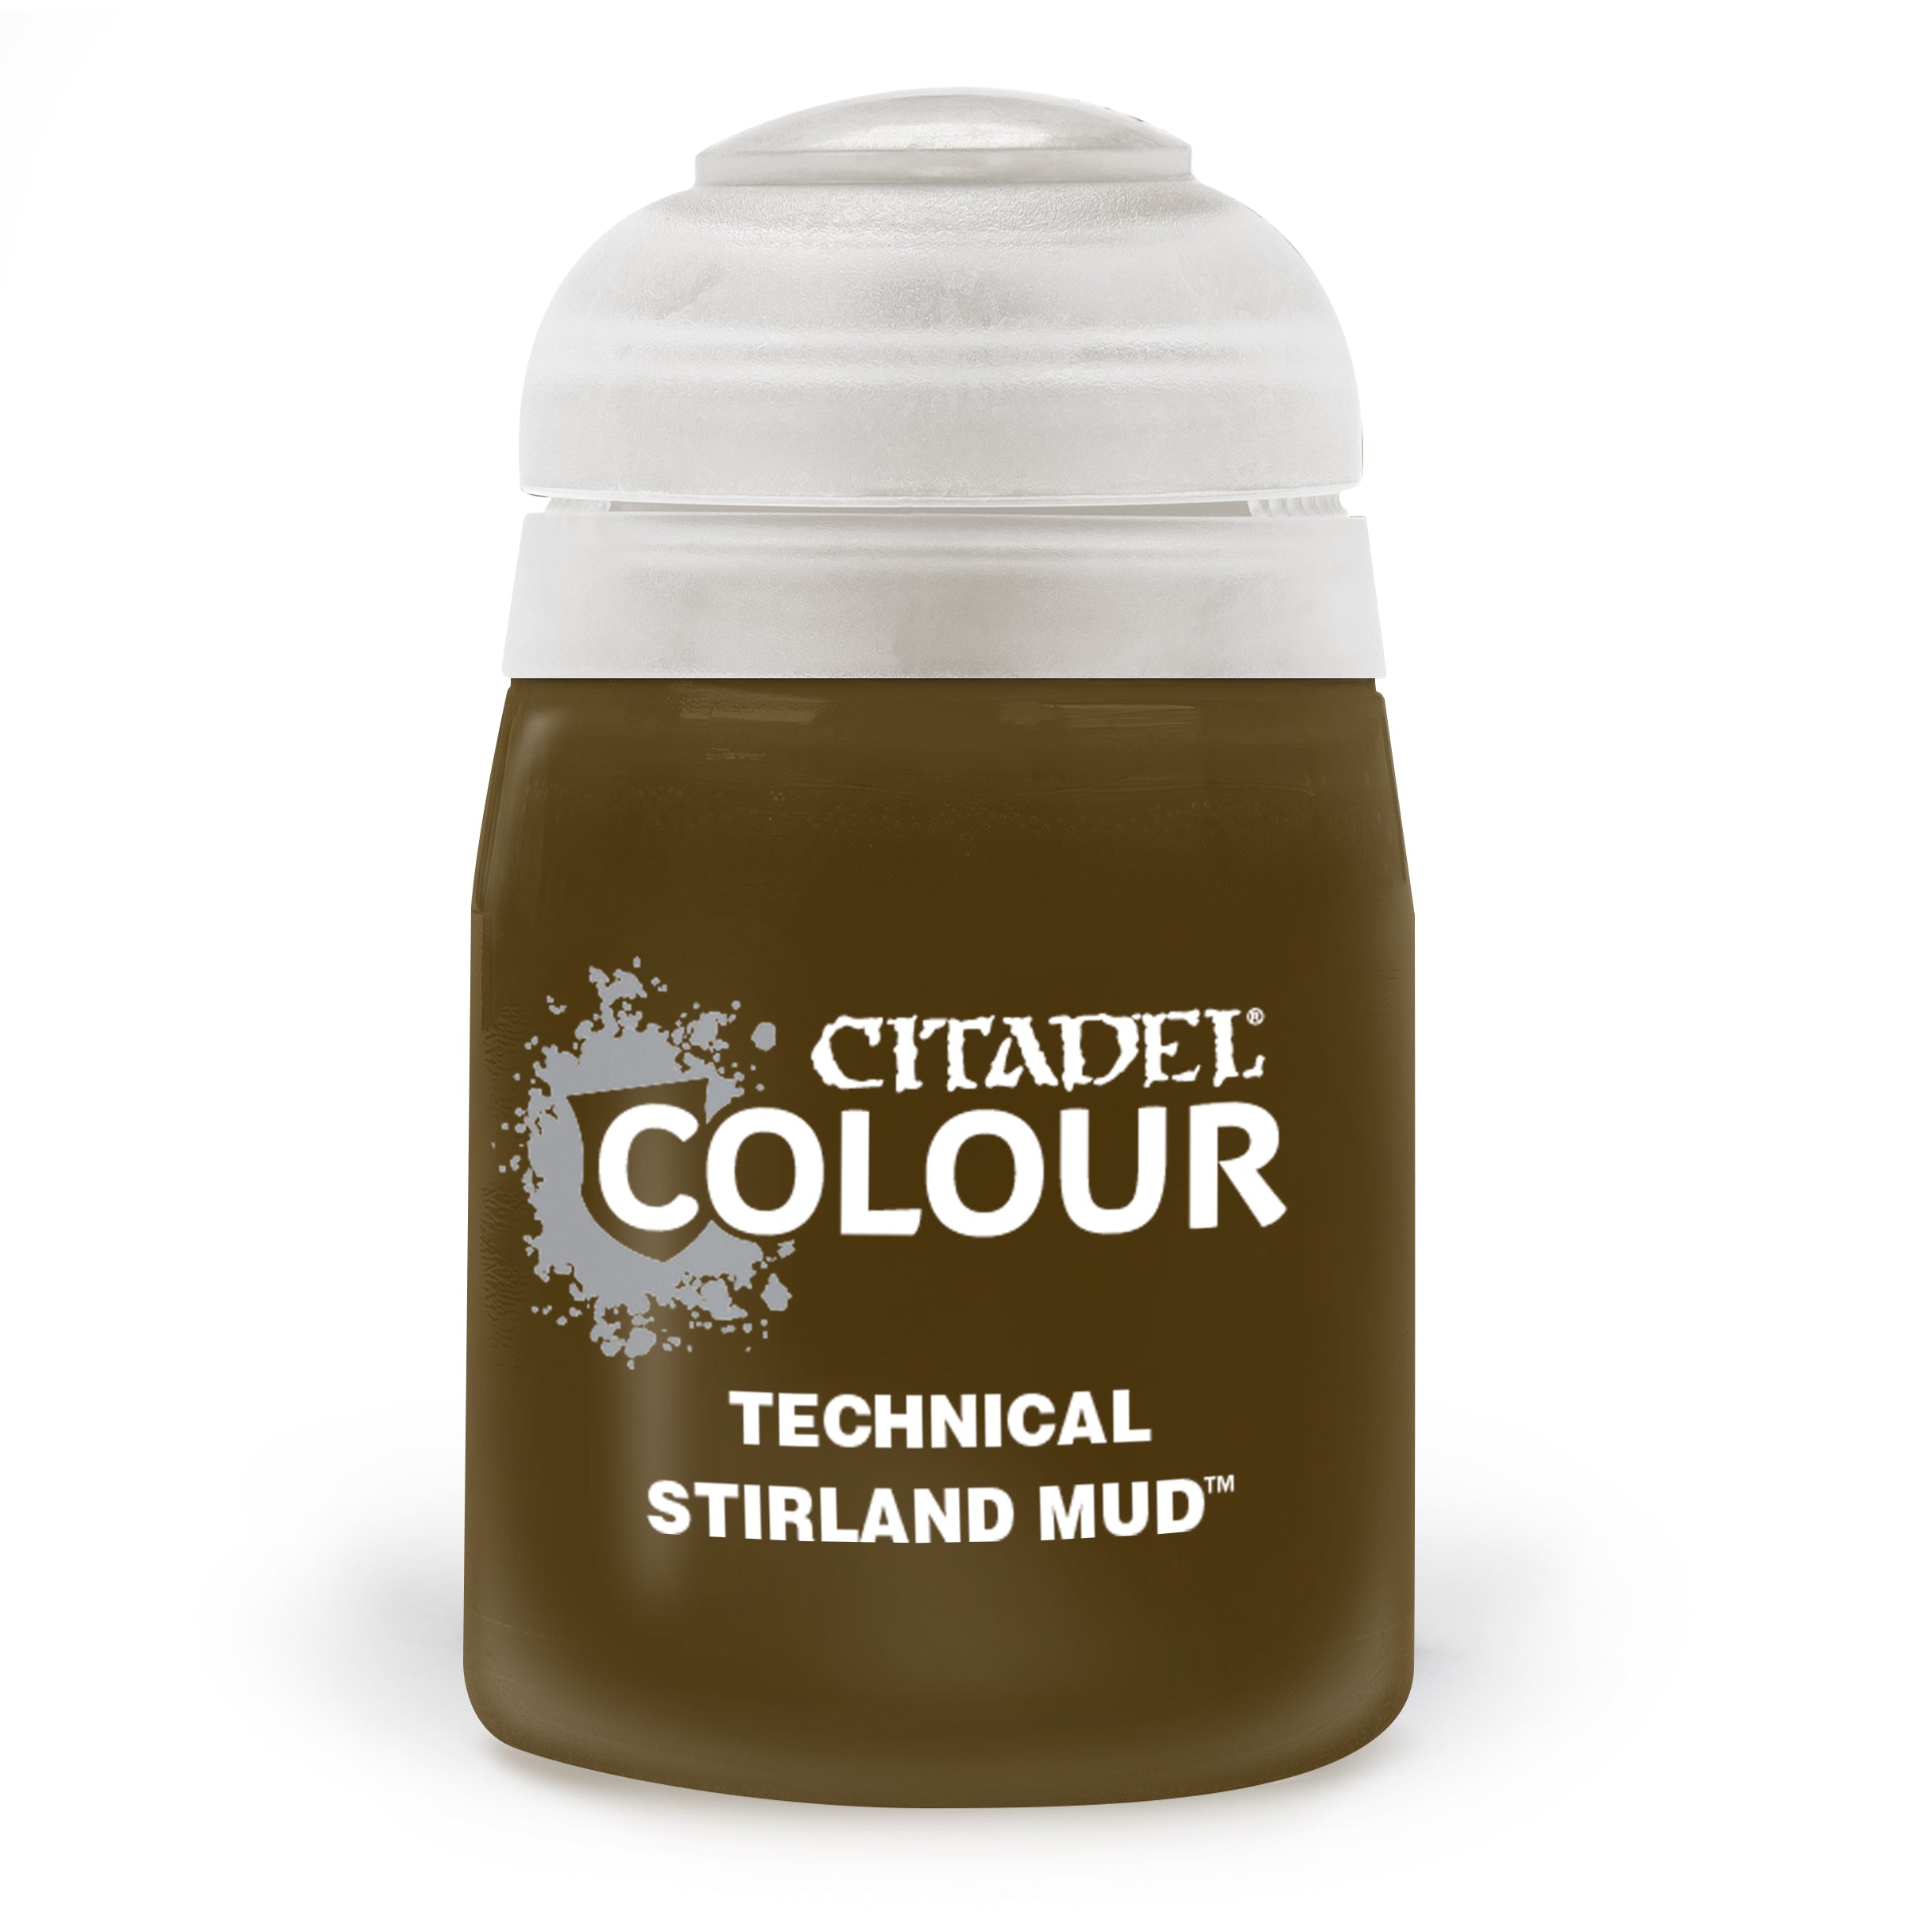 Citadel Colour Technical: Stirland Mud 24ml*